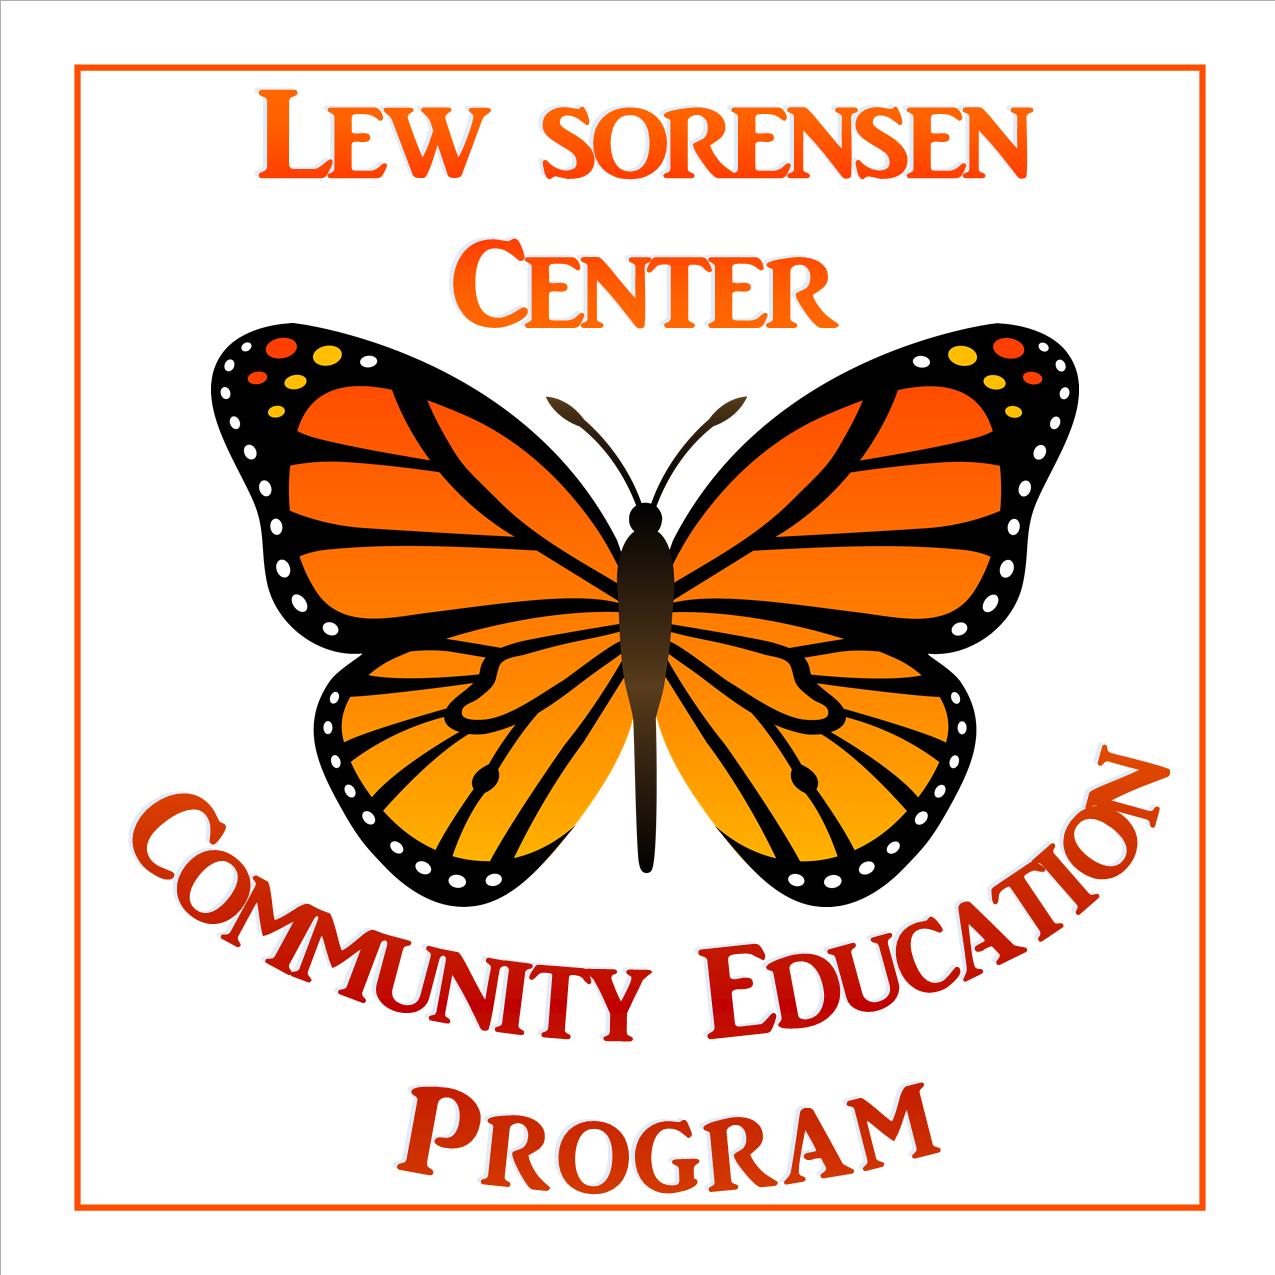 Lew Sorensen Adult Community Education Center